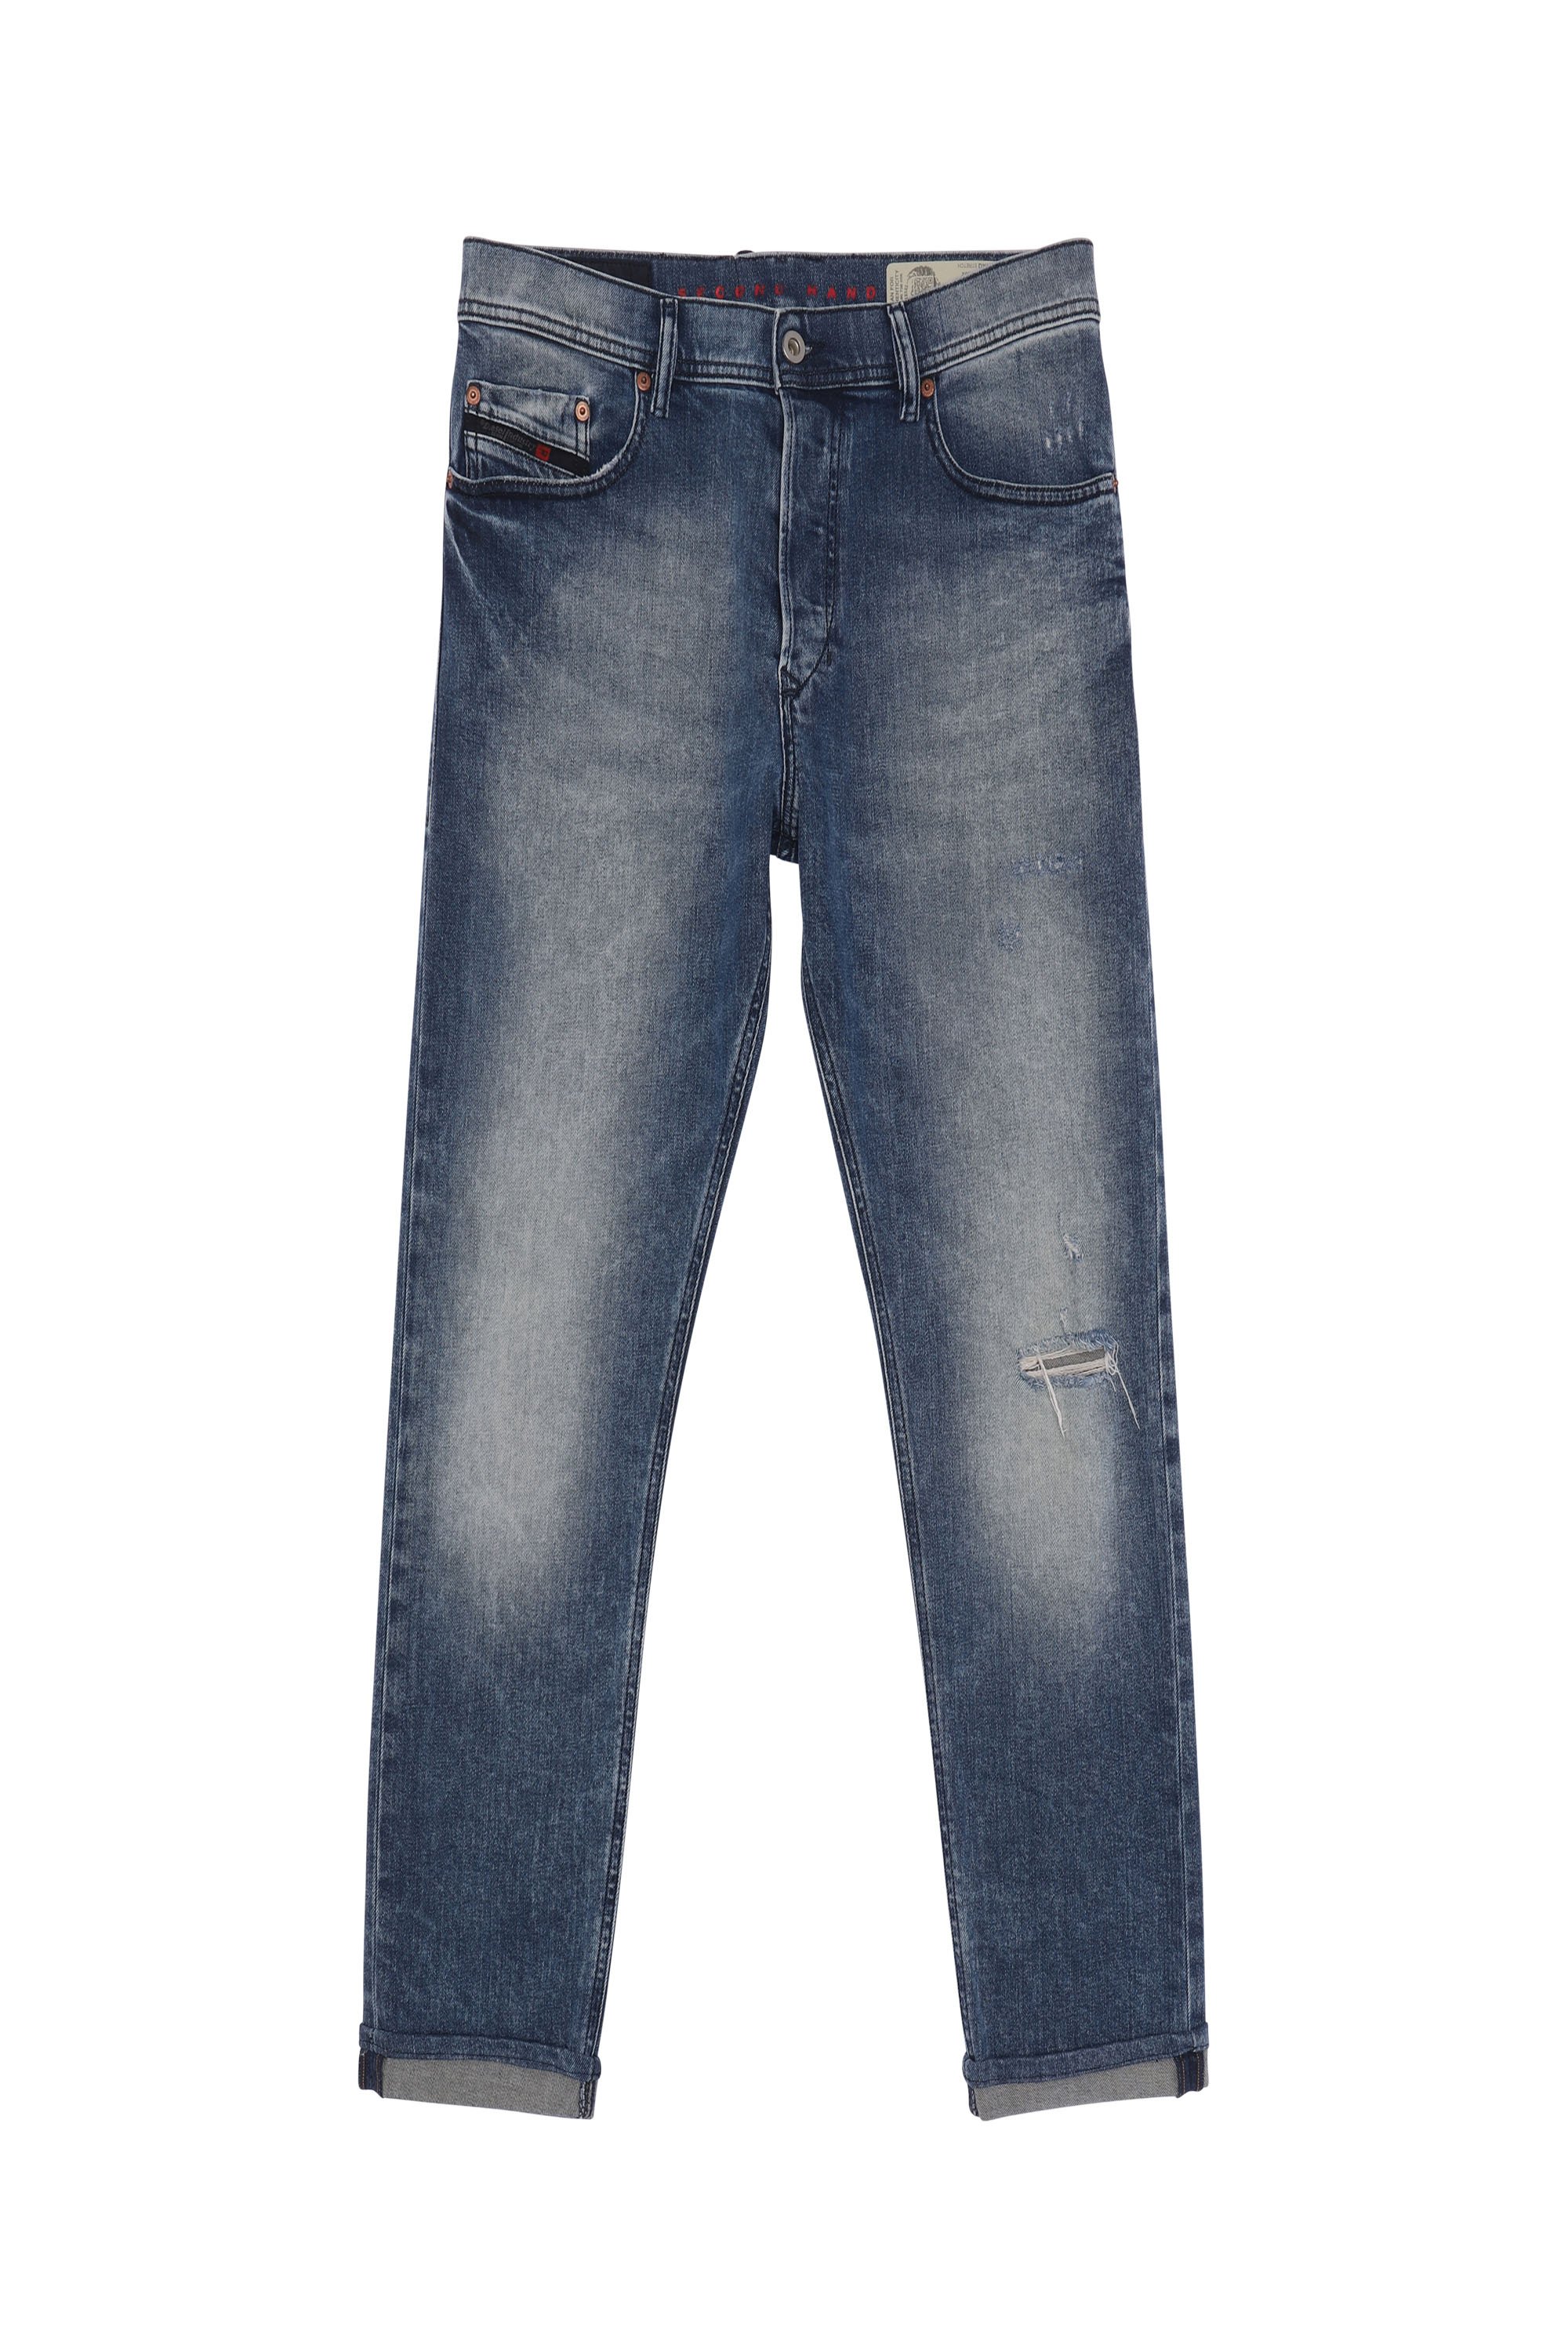 TEPPHAR, Medium blue - Jeans